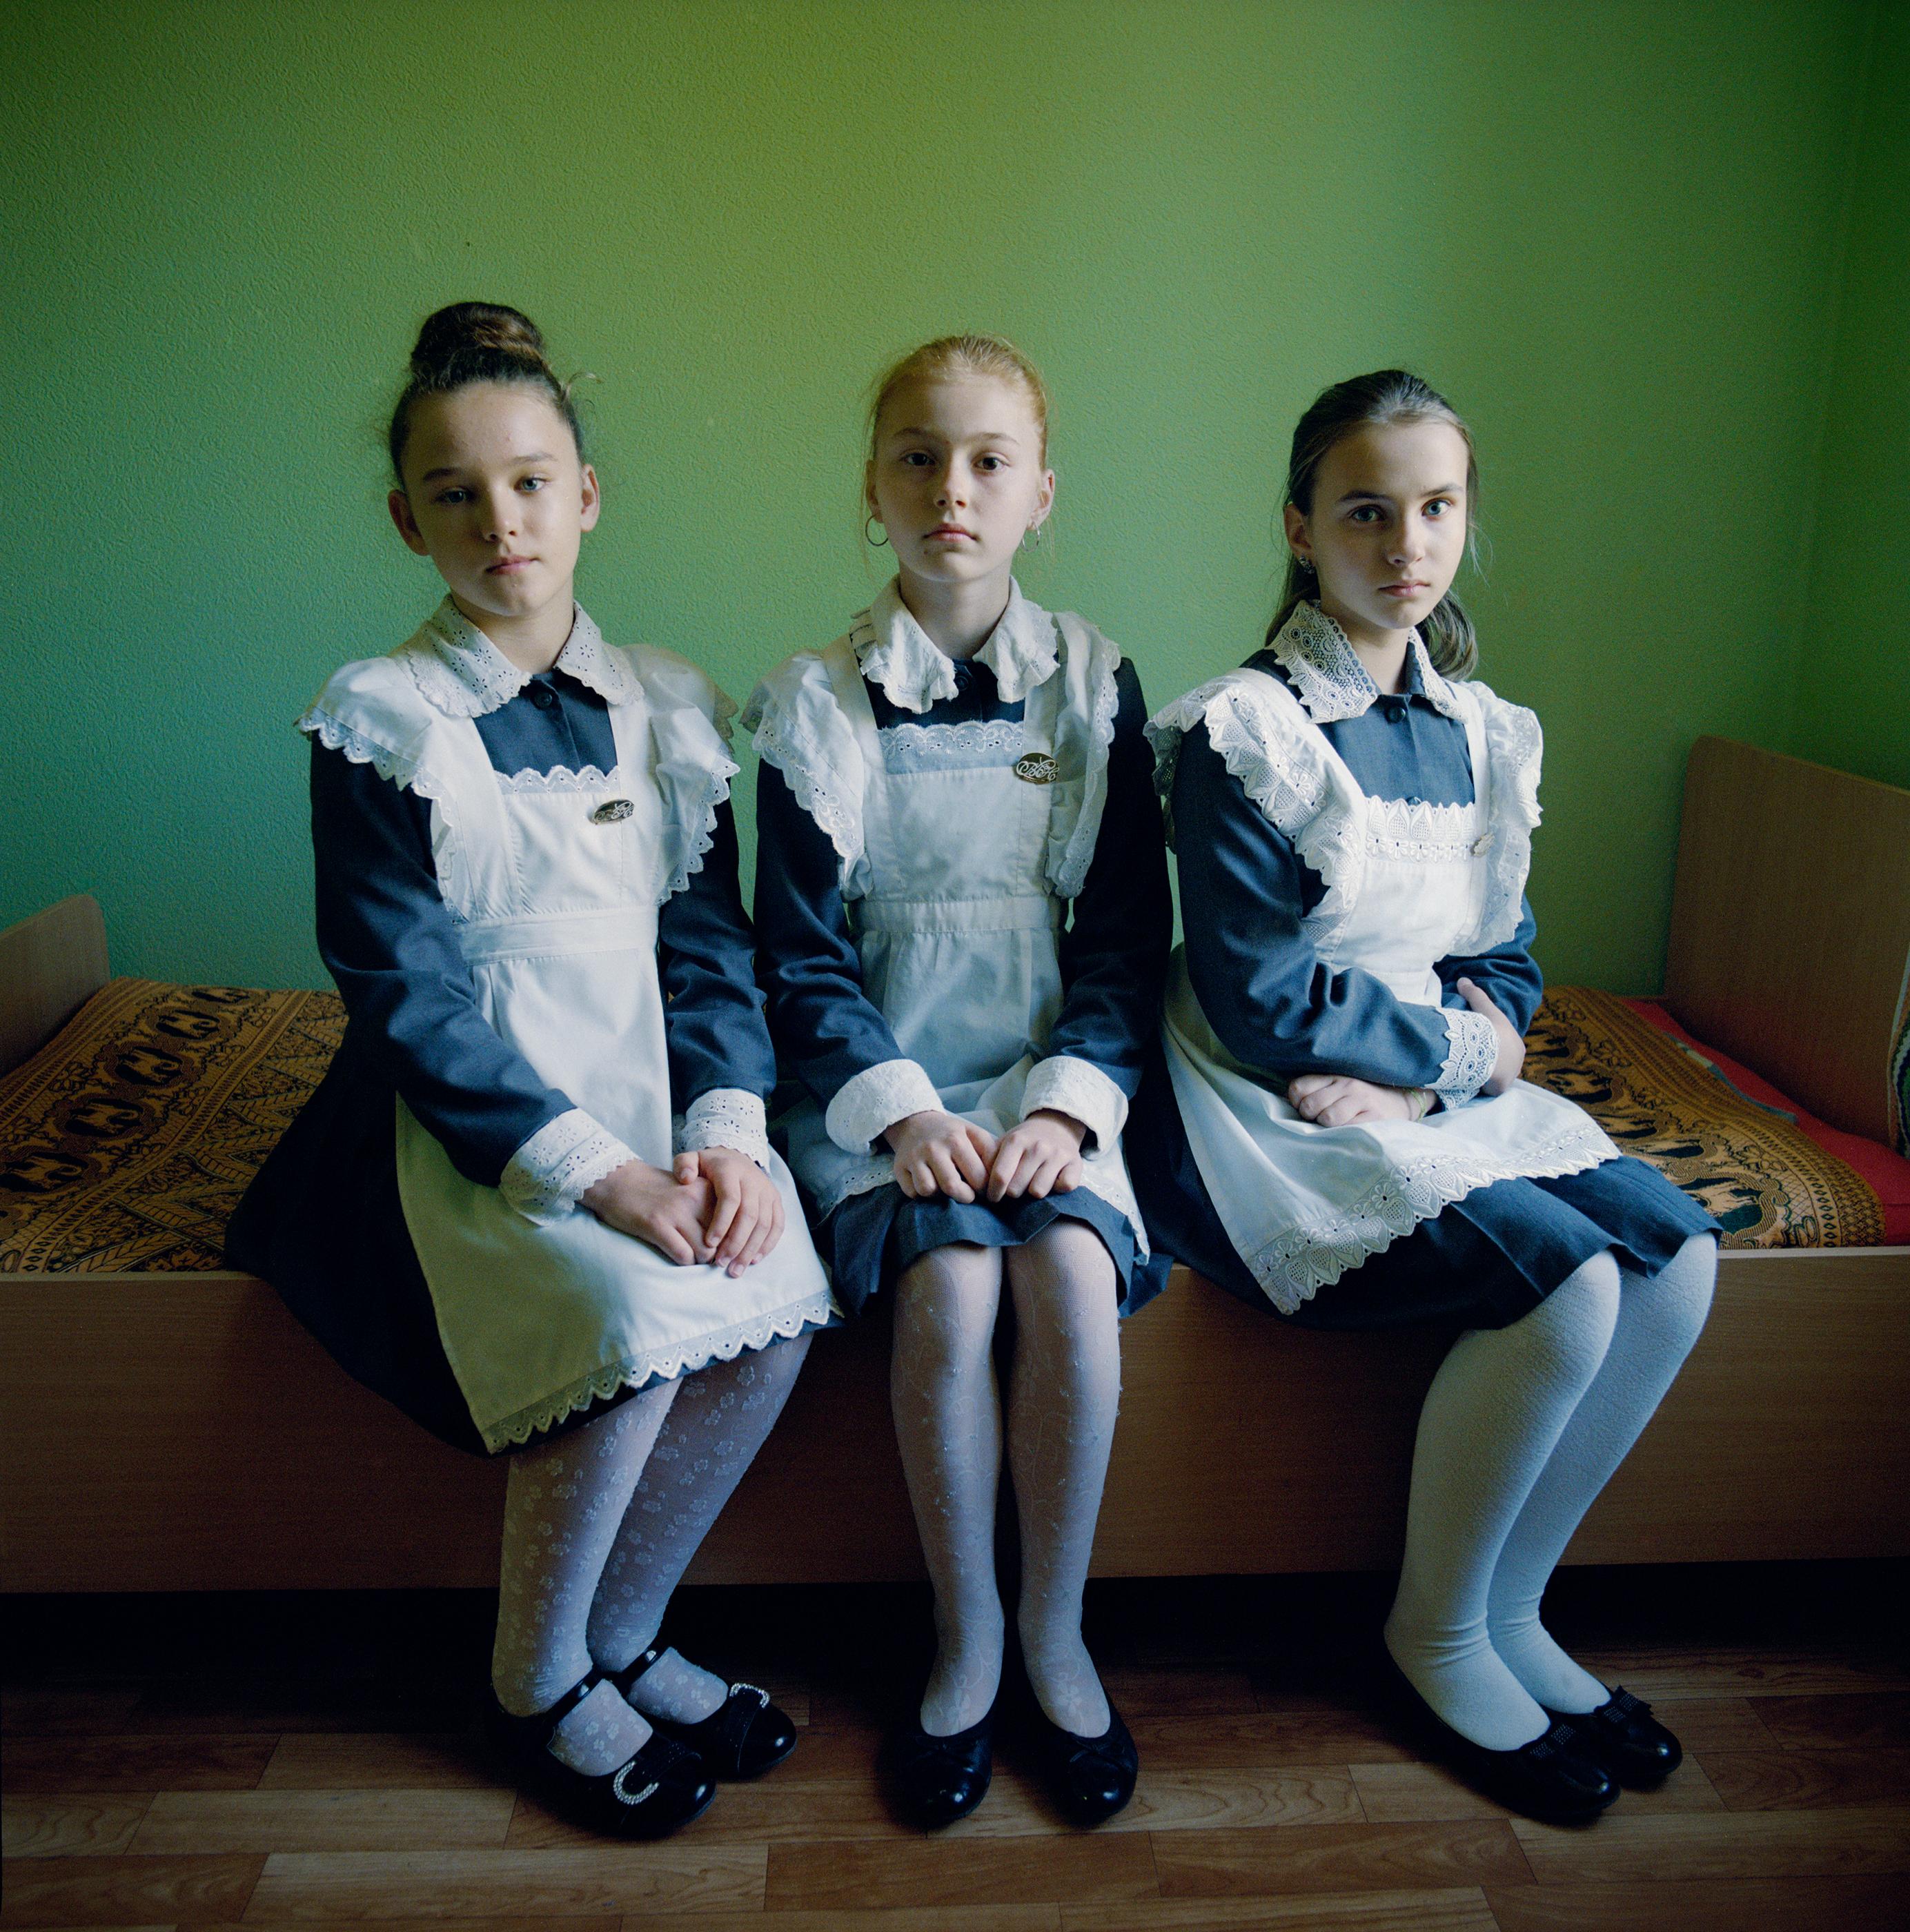 Michal Chelbin Portrait Photograph - Aleira and Friends, Ukraine